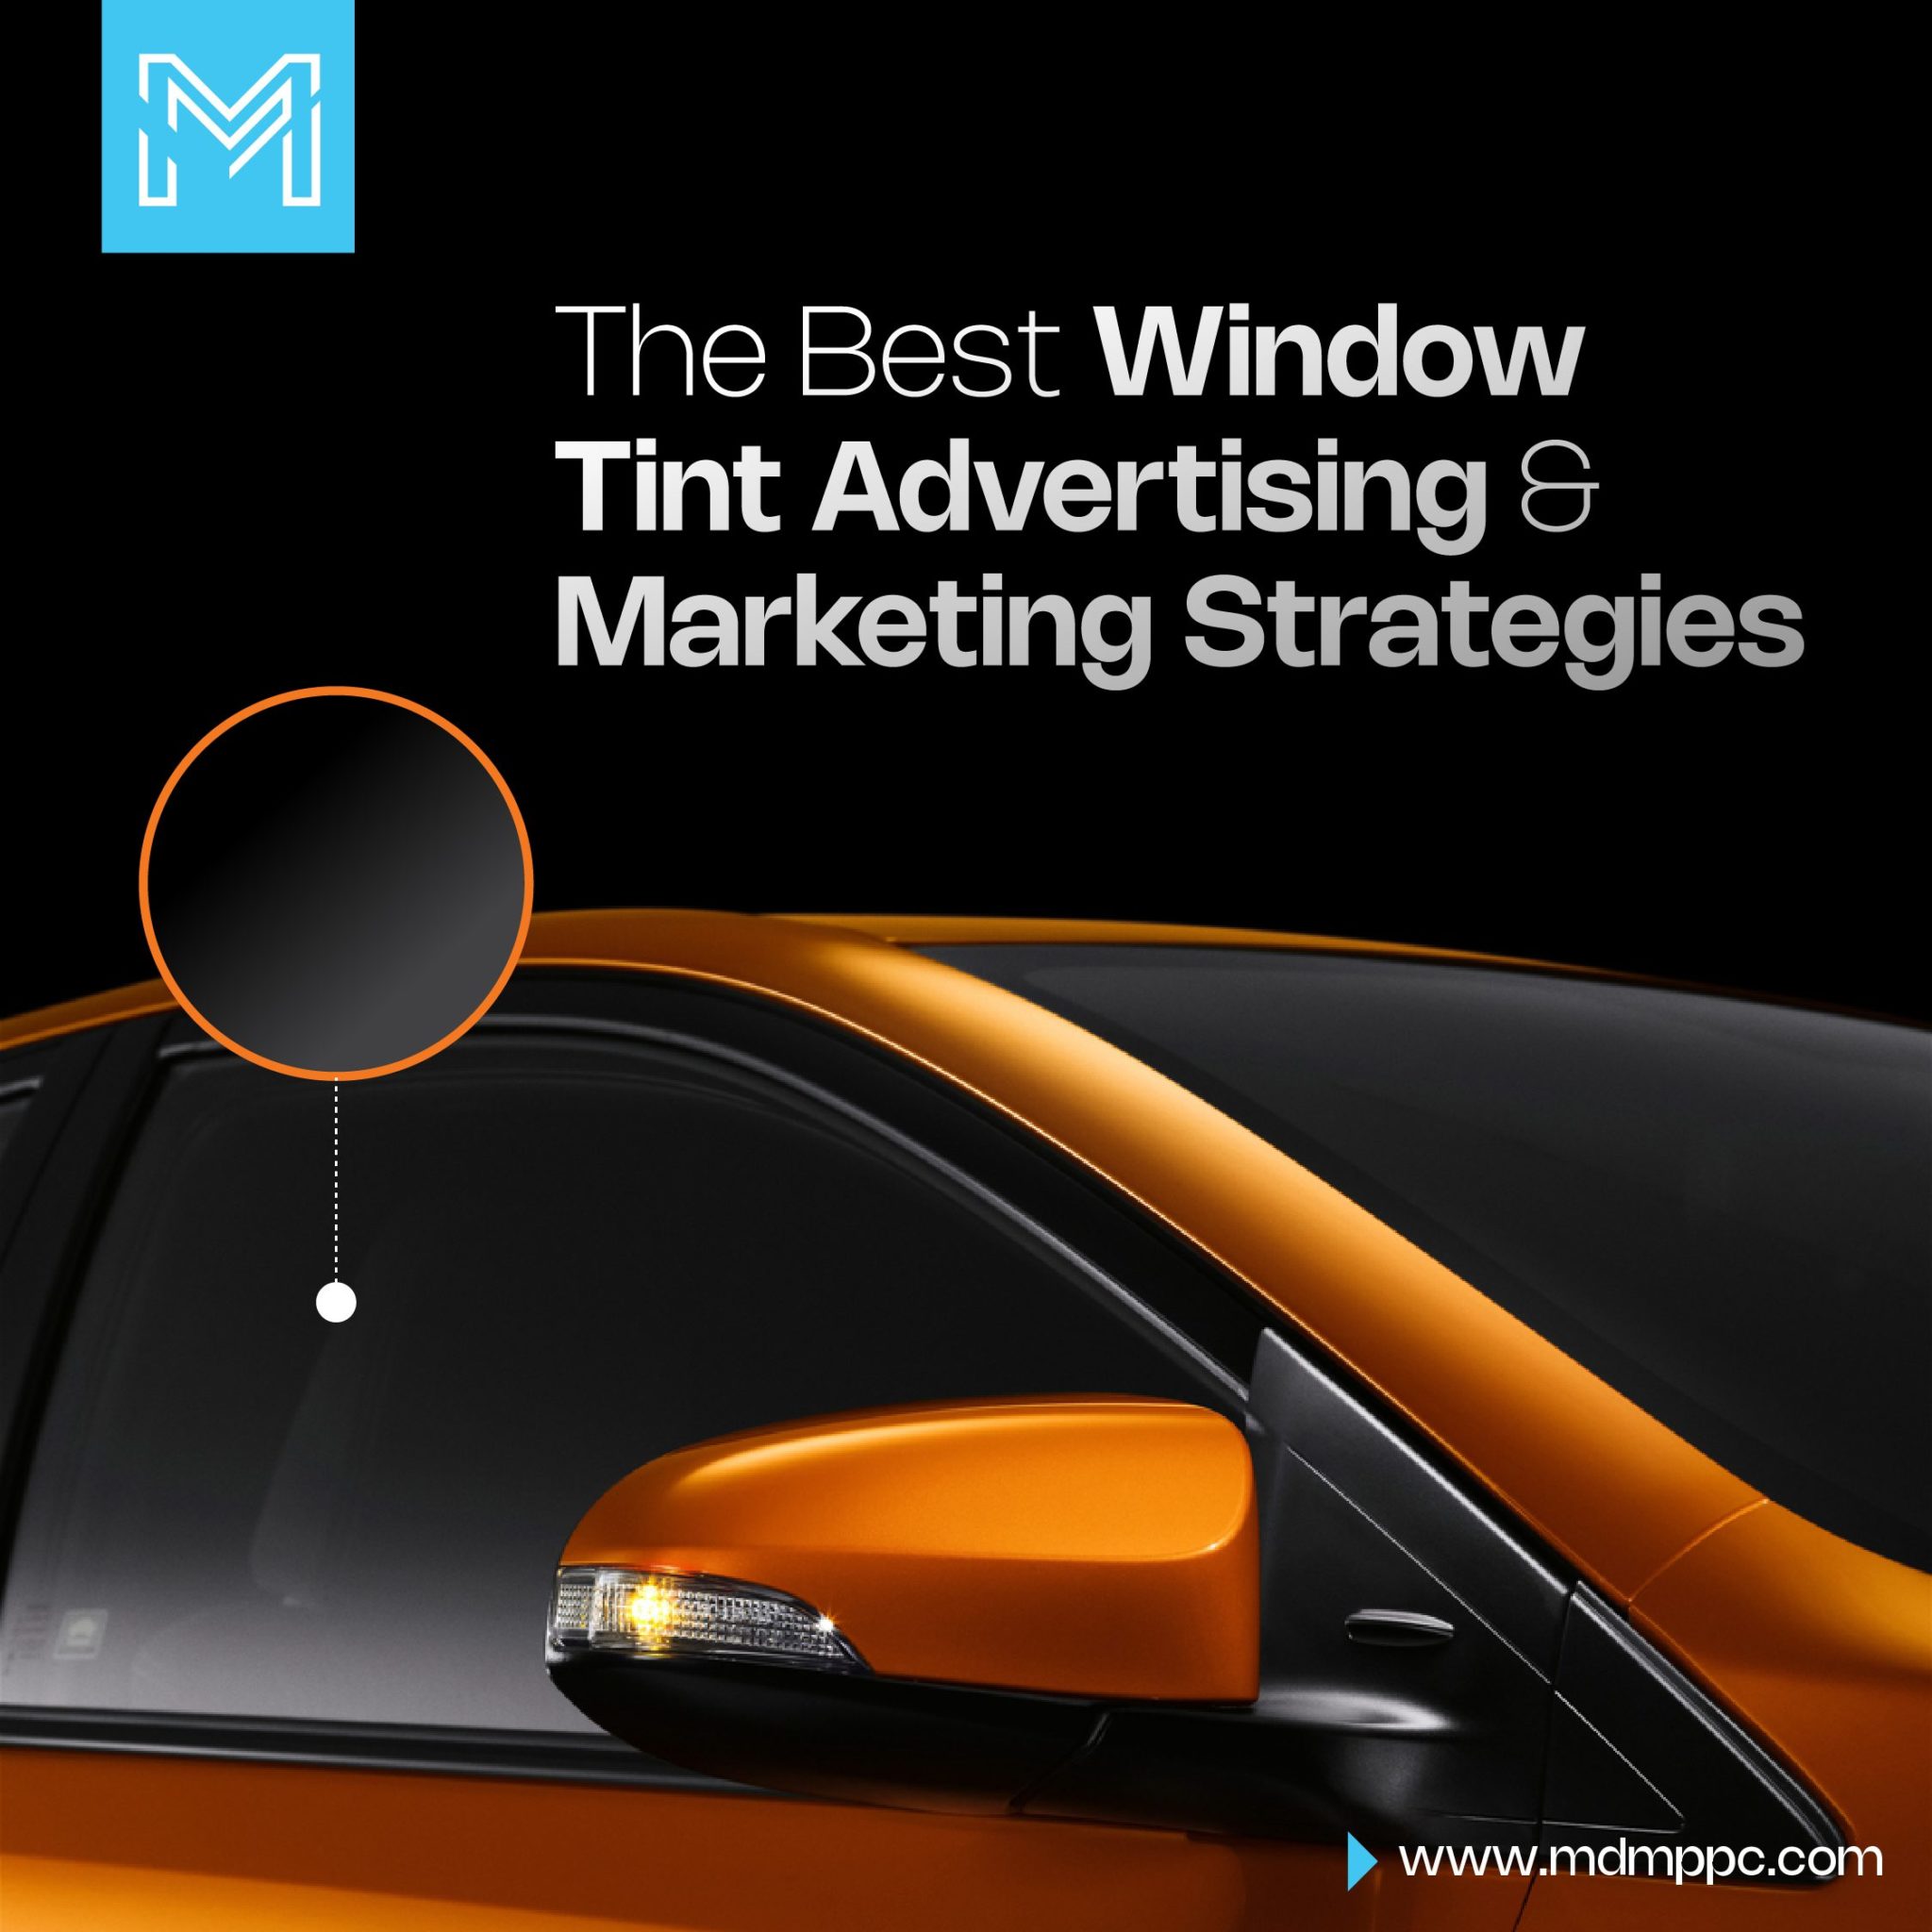 Car Window Tint Advertising & Marketing Strategies | McElligott Digital Marketing